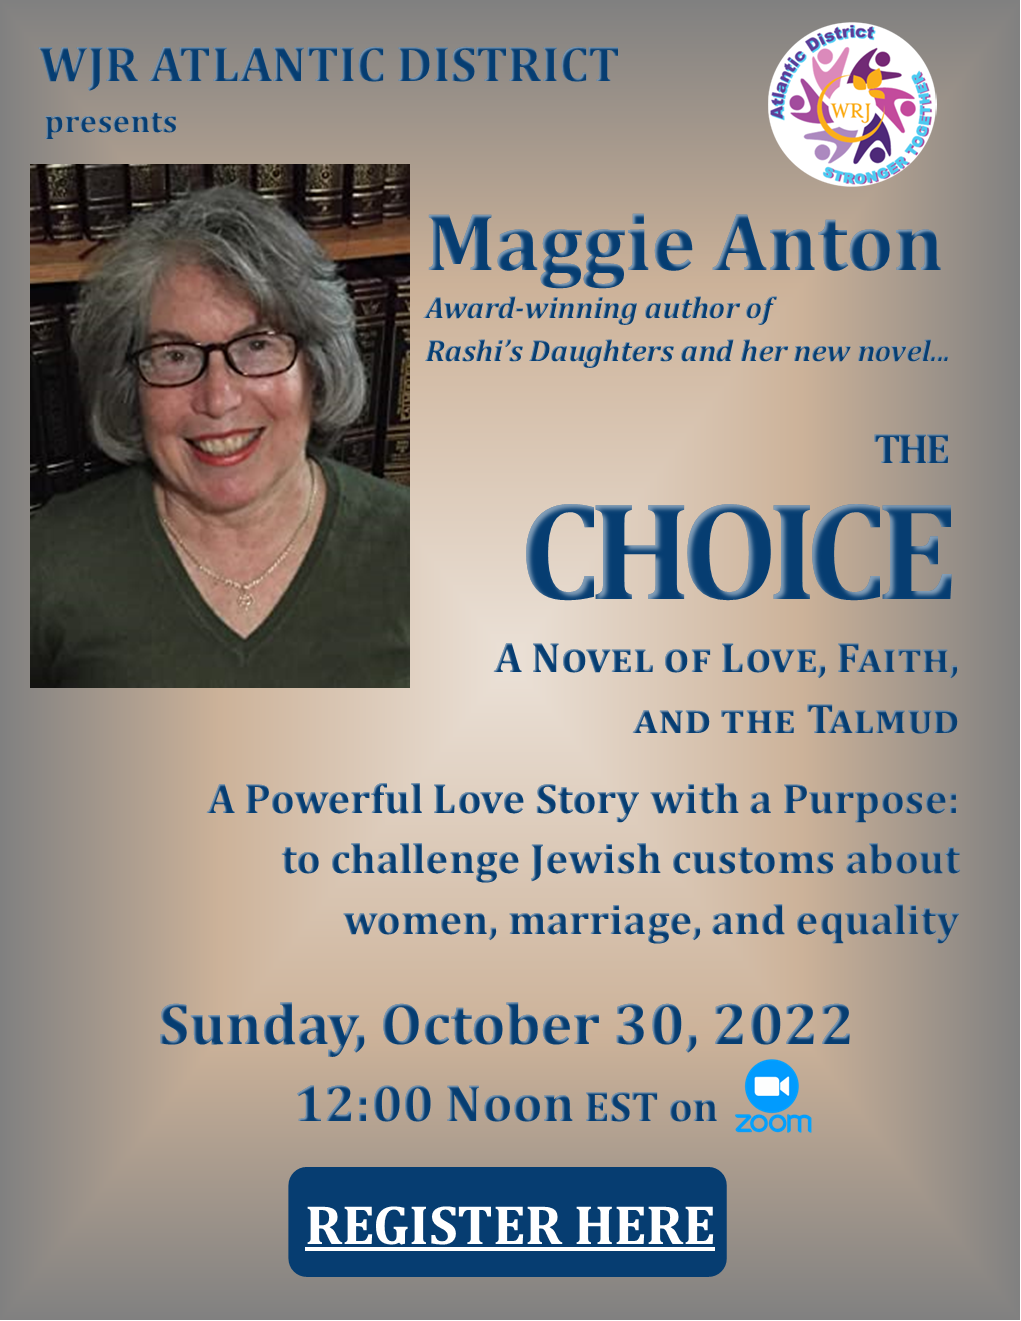 Maggie Anton will speak on October 30